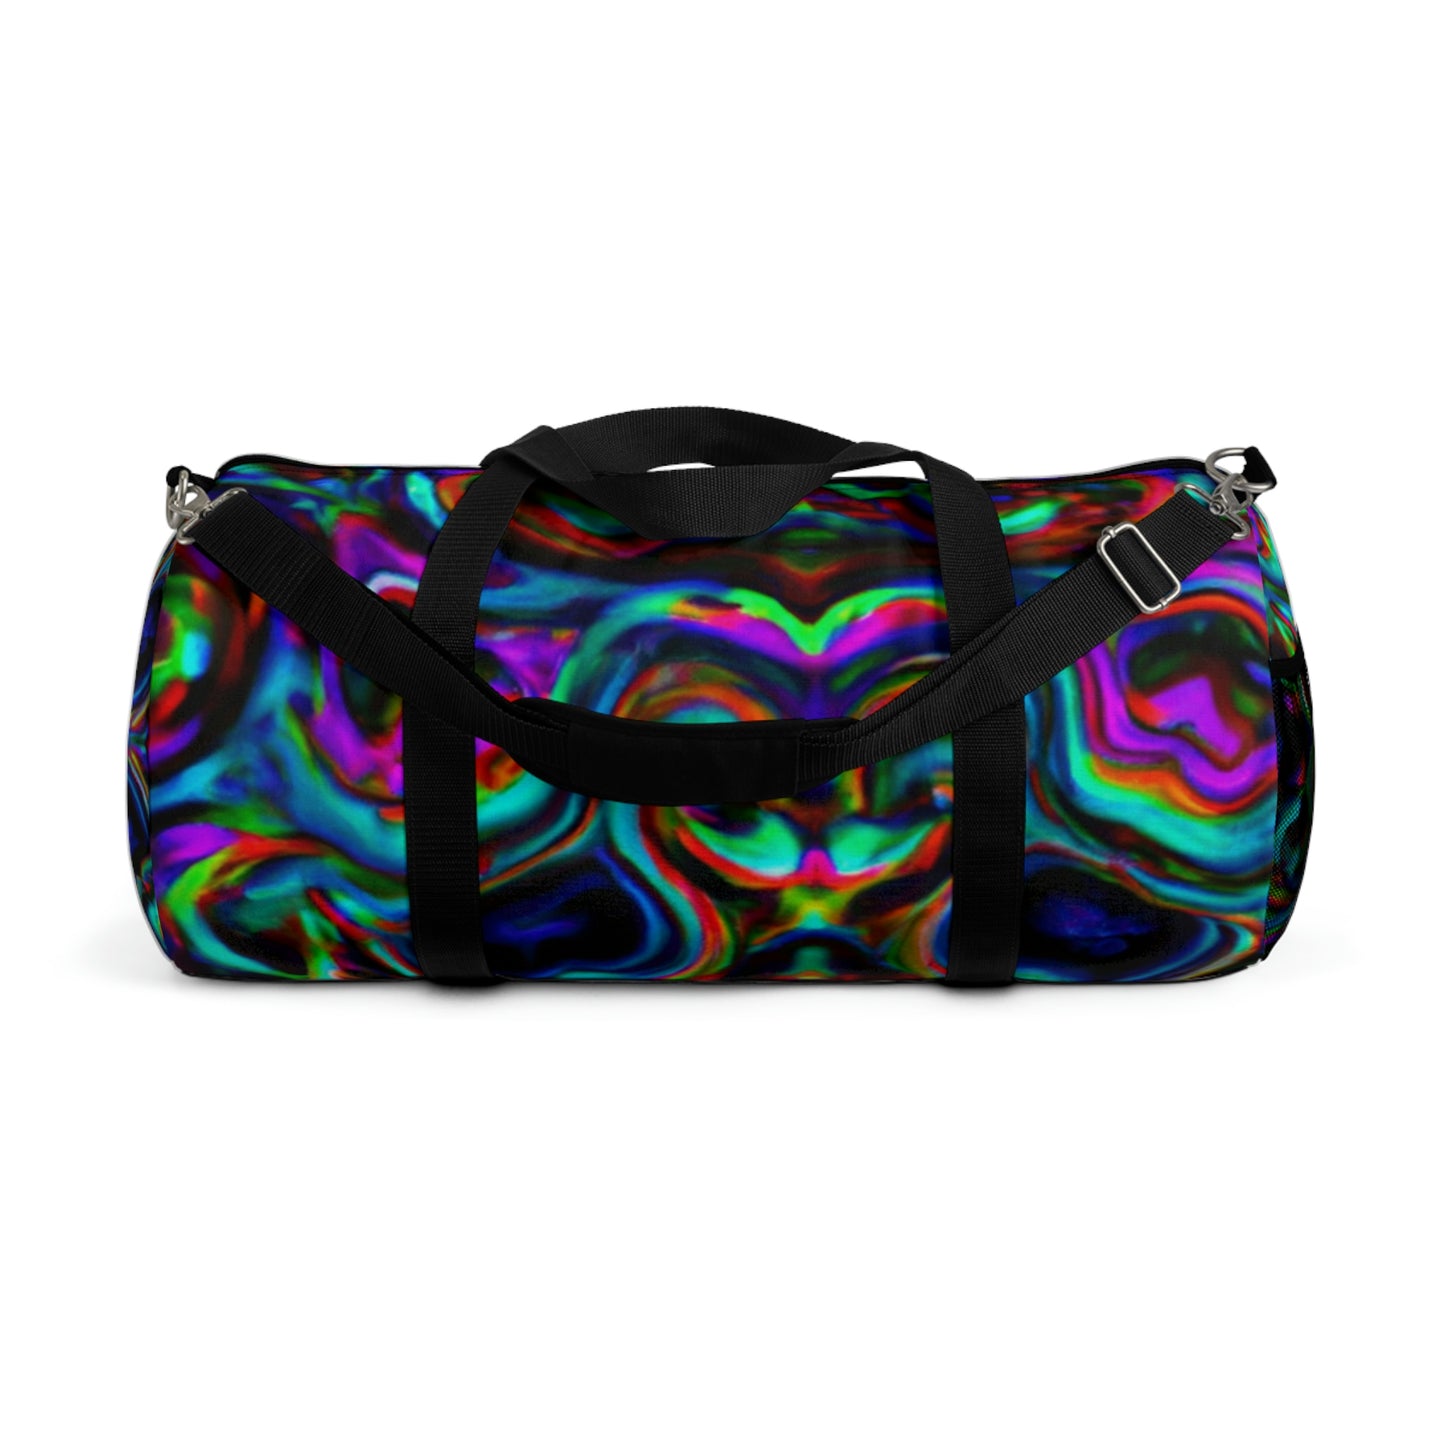 Cecilleluxe - Psychedelic Duffel Bag